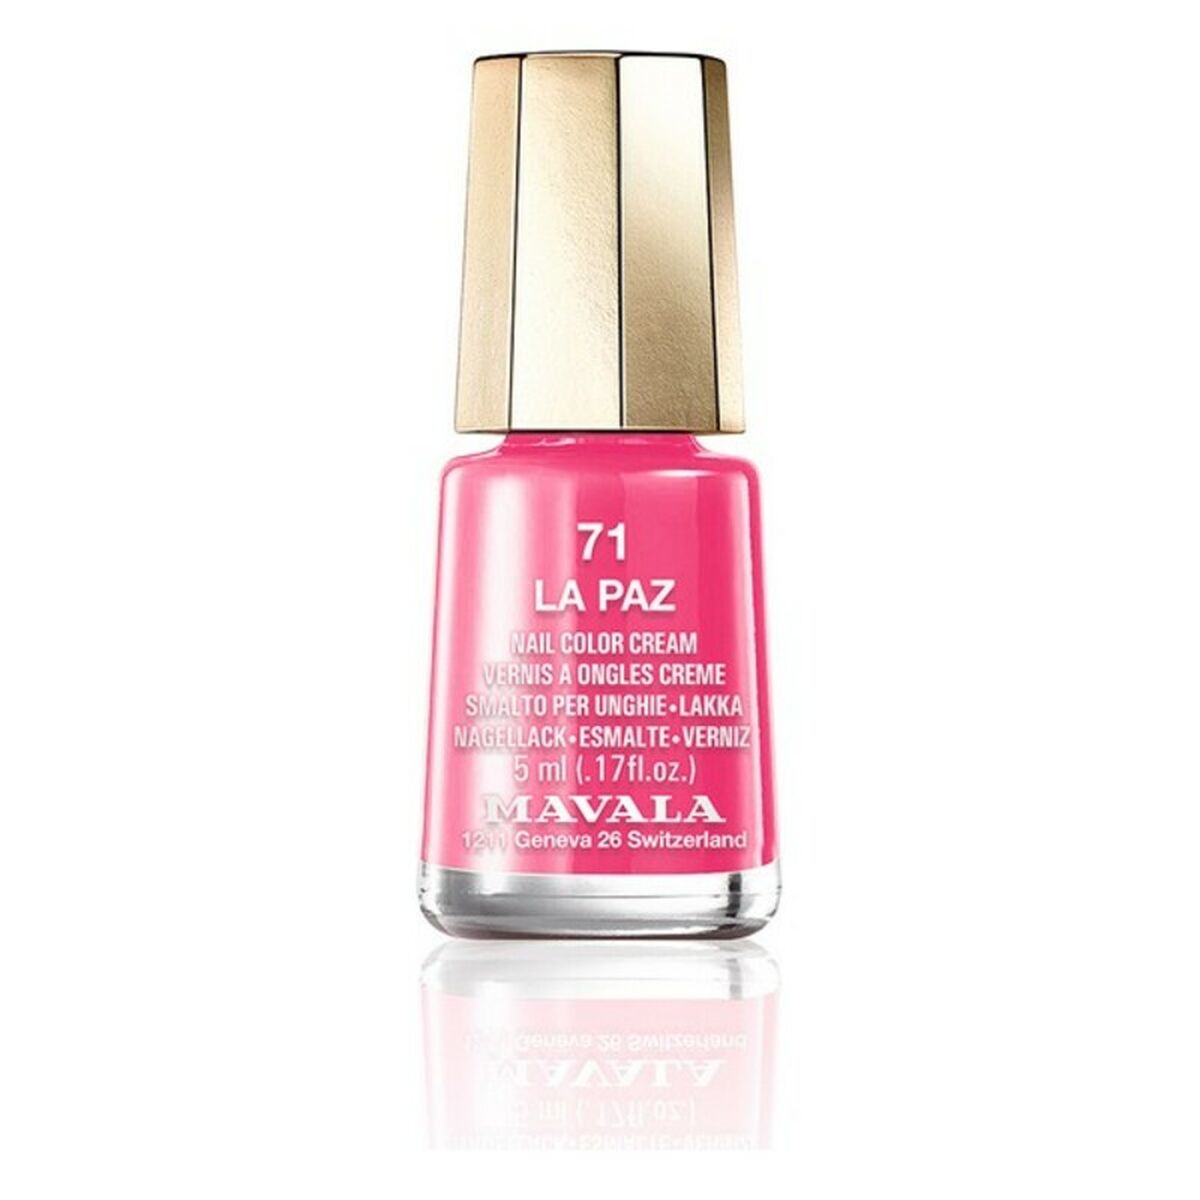 Nail polish Nail Color Cream Mavala 71-la paz (5 ml)